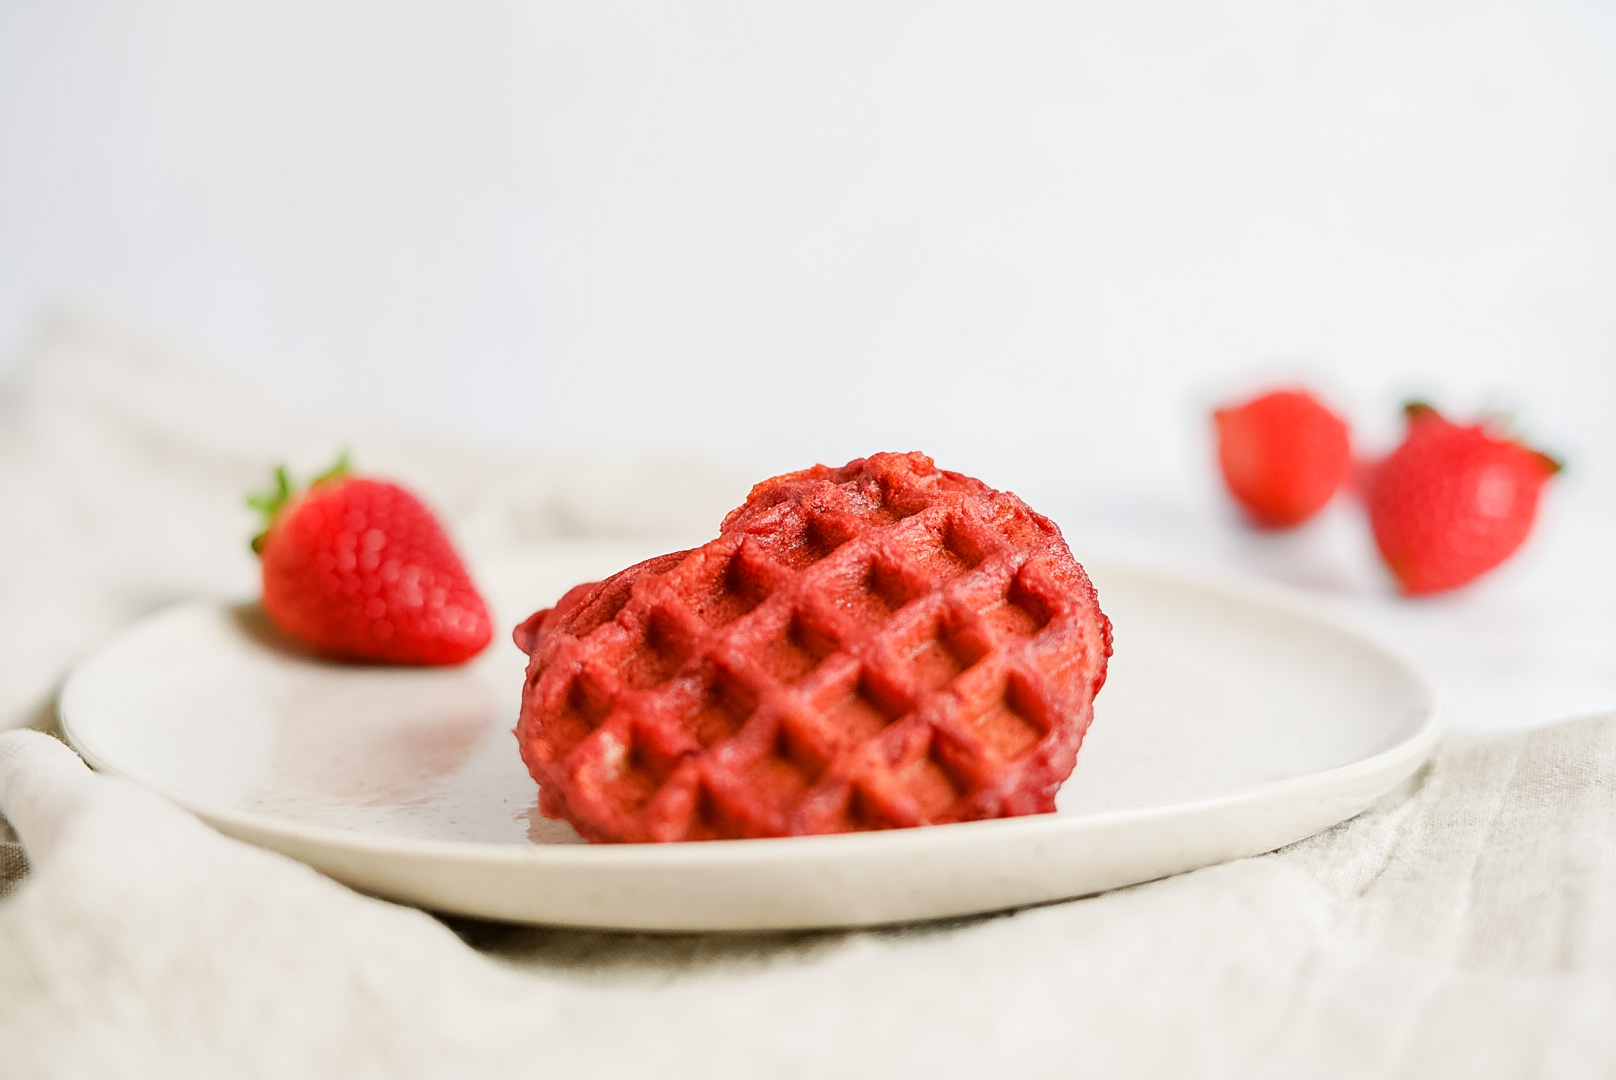 dash heart shaped waffles maker on a plate